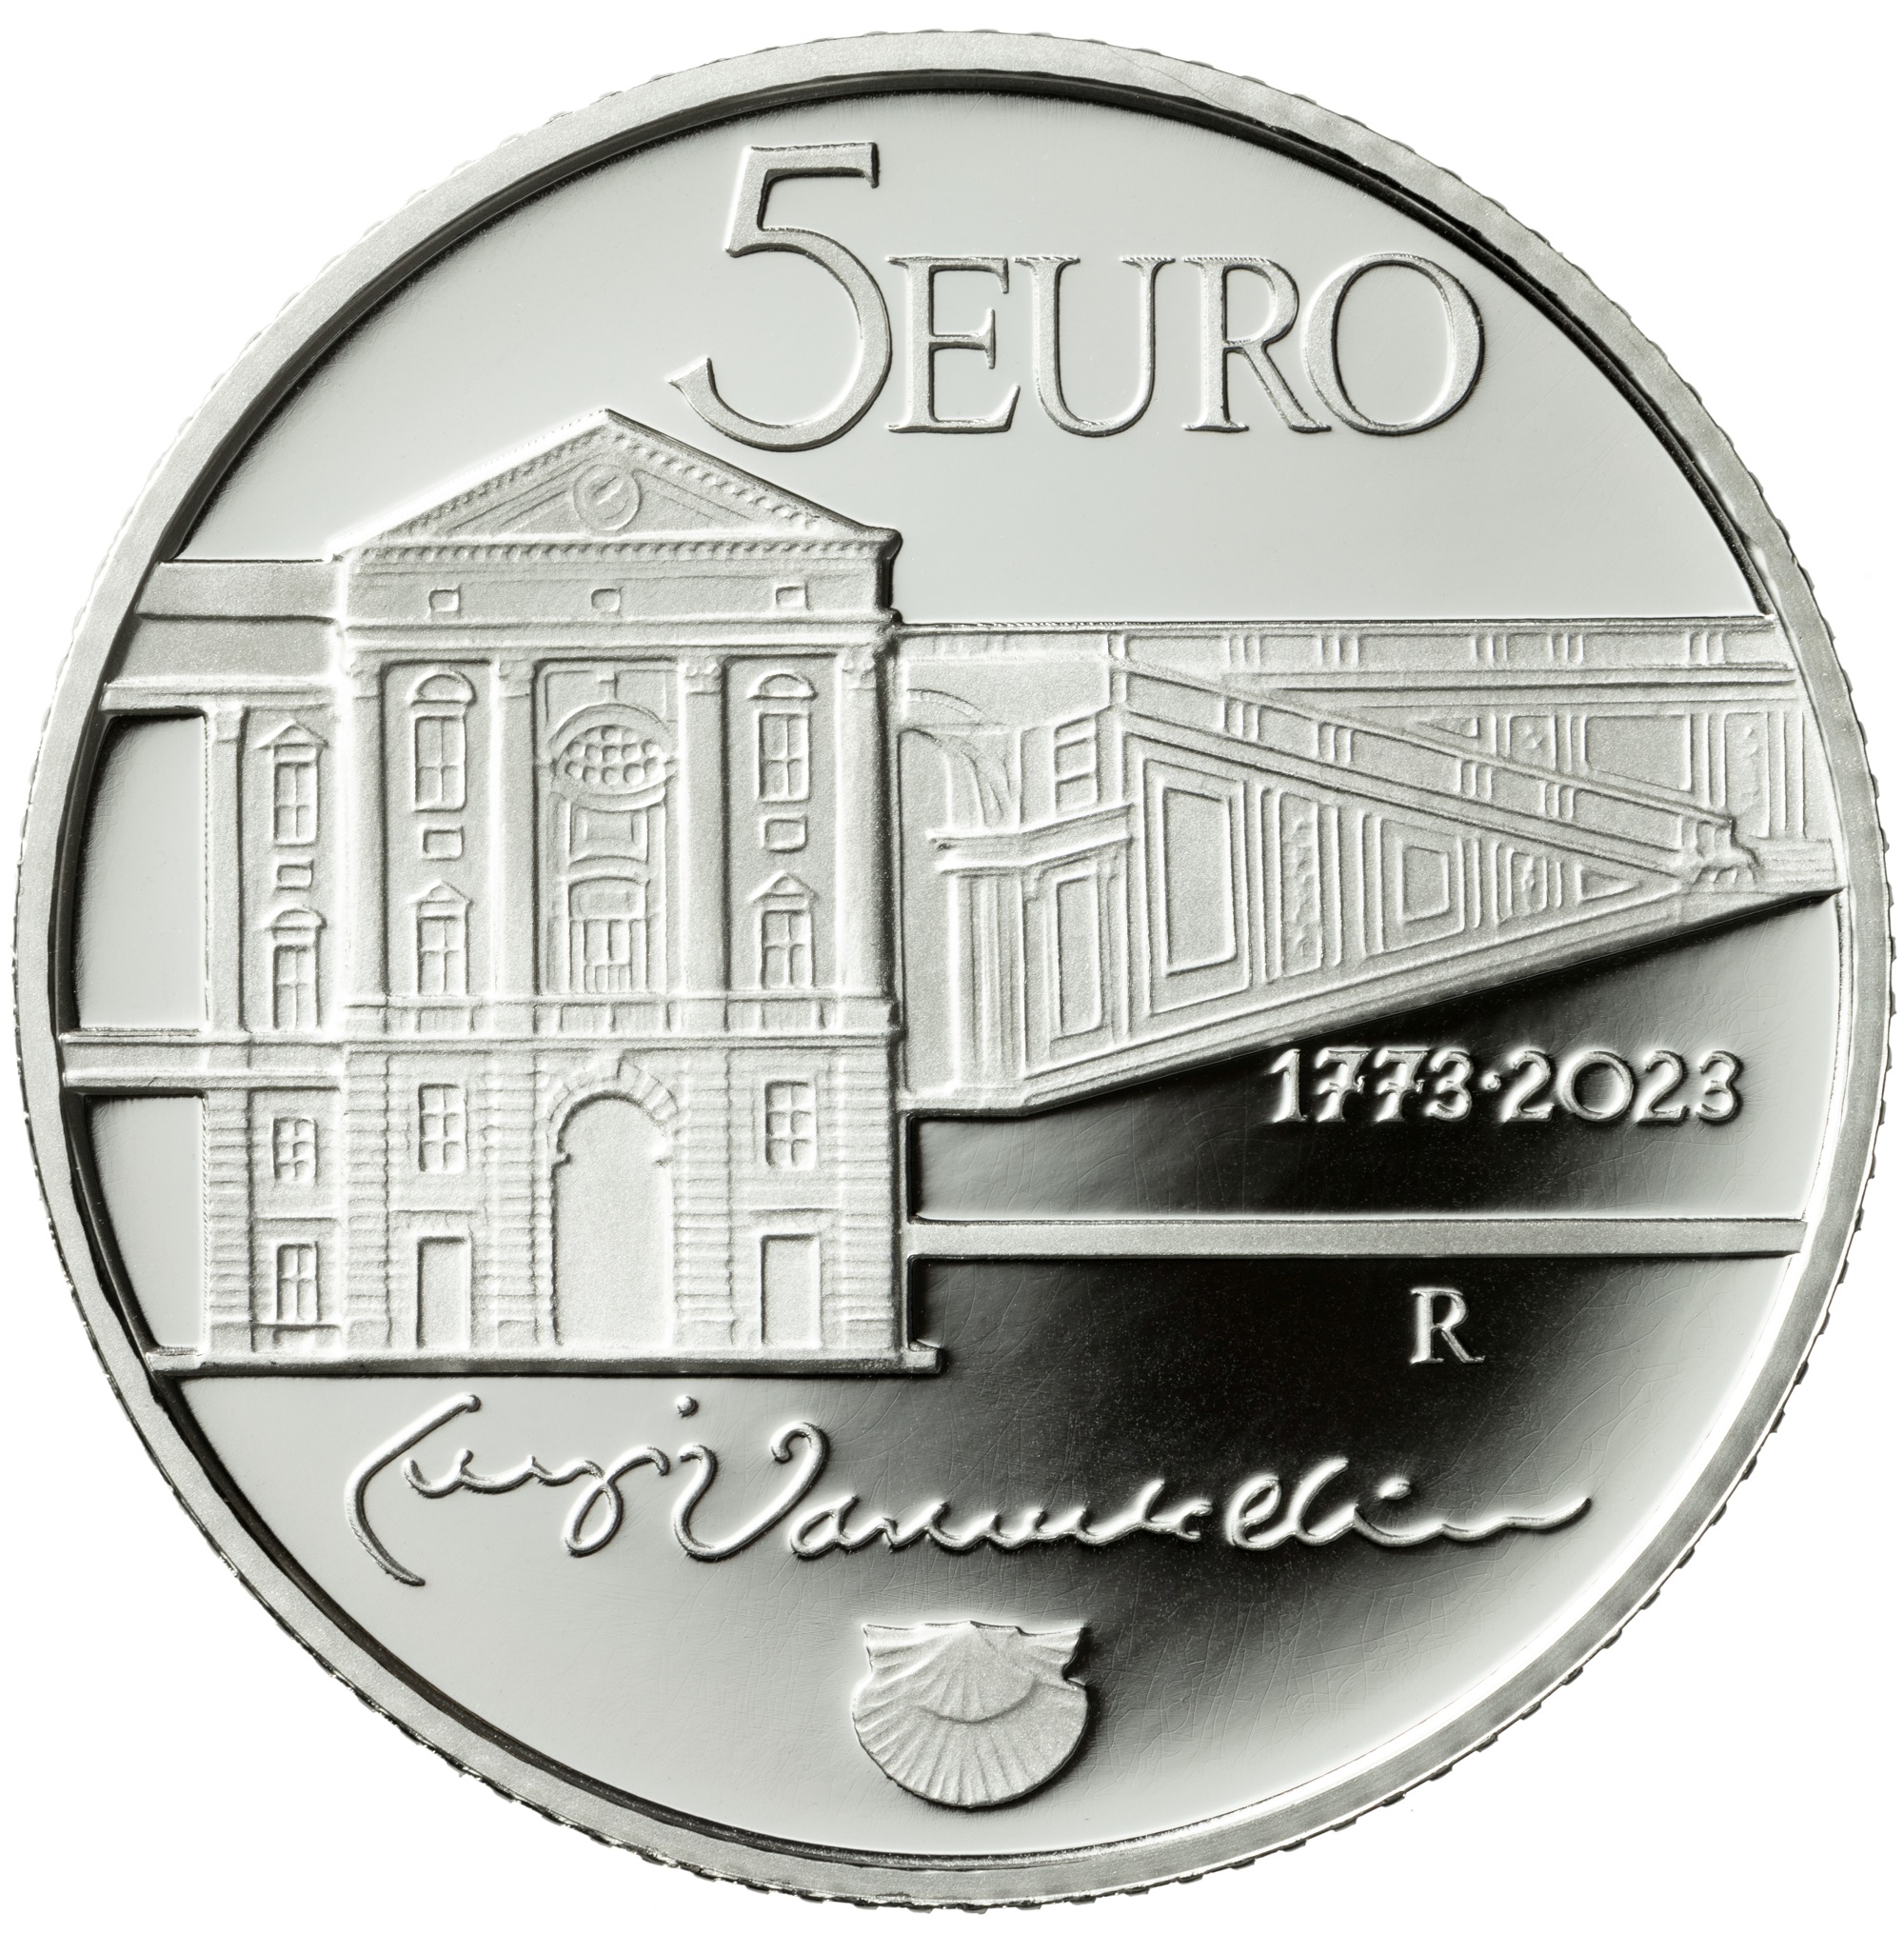 (EUR10.Proof.2023.48-2ms10-23p012) 5 € Italy 2023 Proof silver - Luigi Vanvitelli Reverse (zoom)